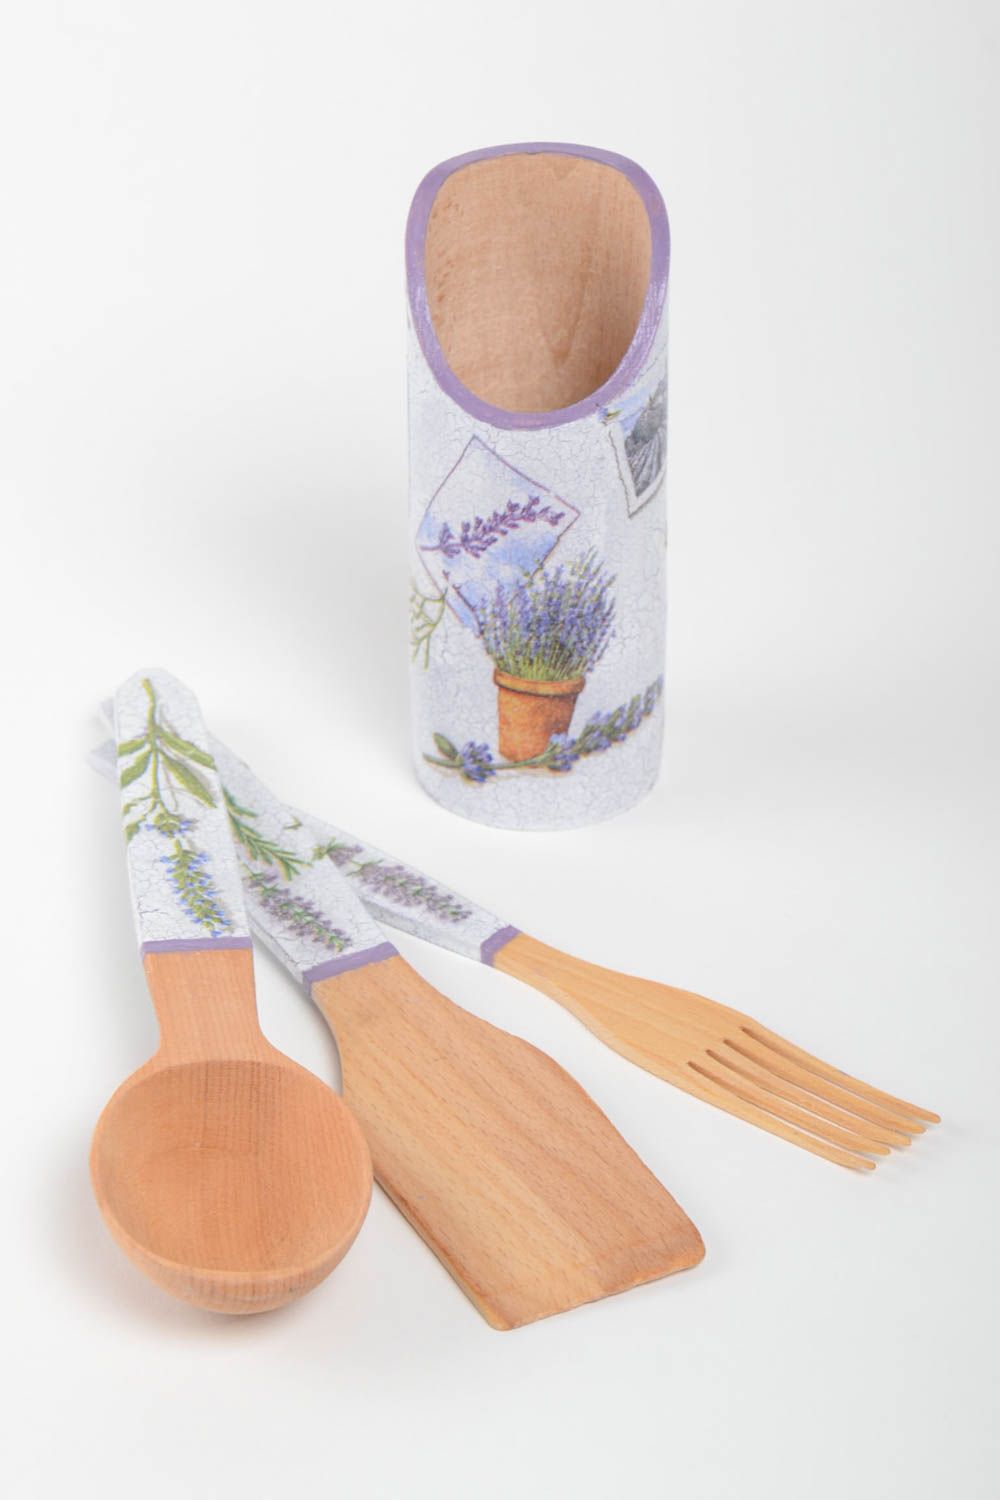 Handmade kitchen utensils set wooden spatula fork spoon decoupage ideas photo 2